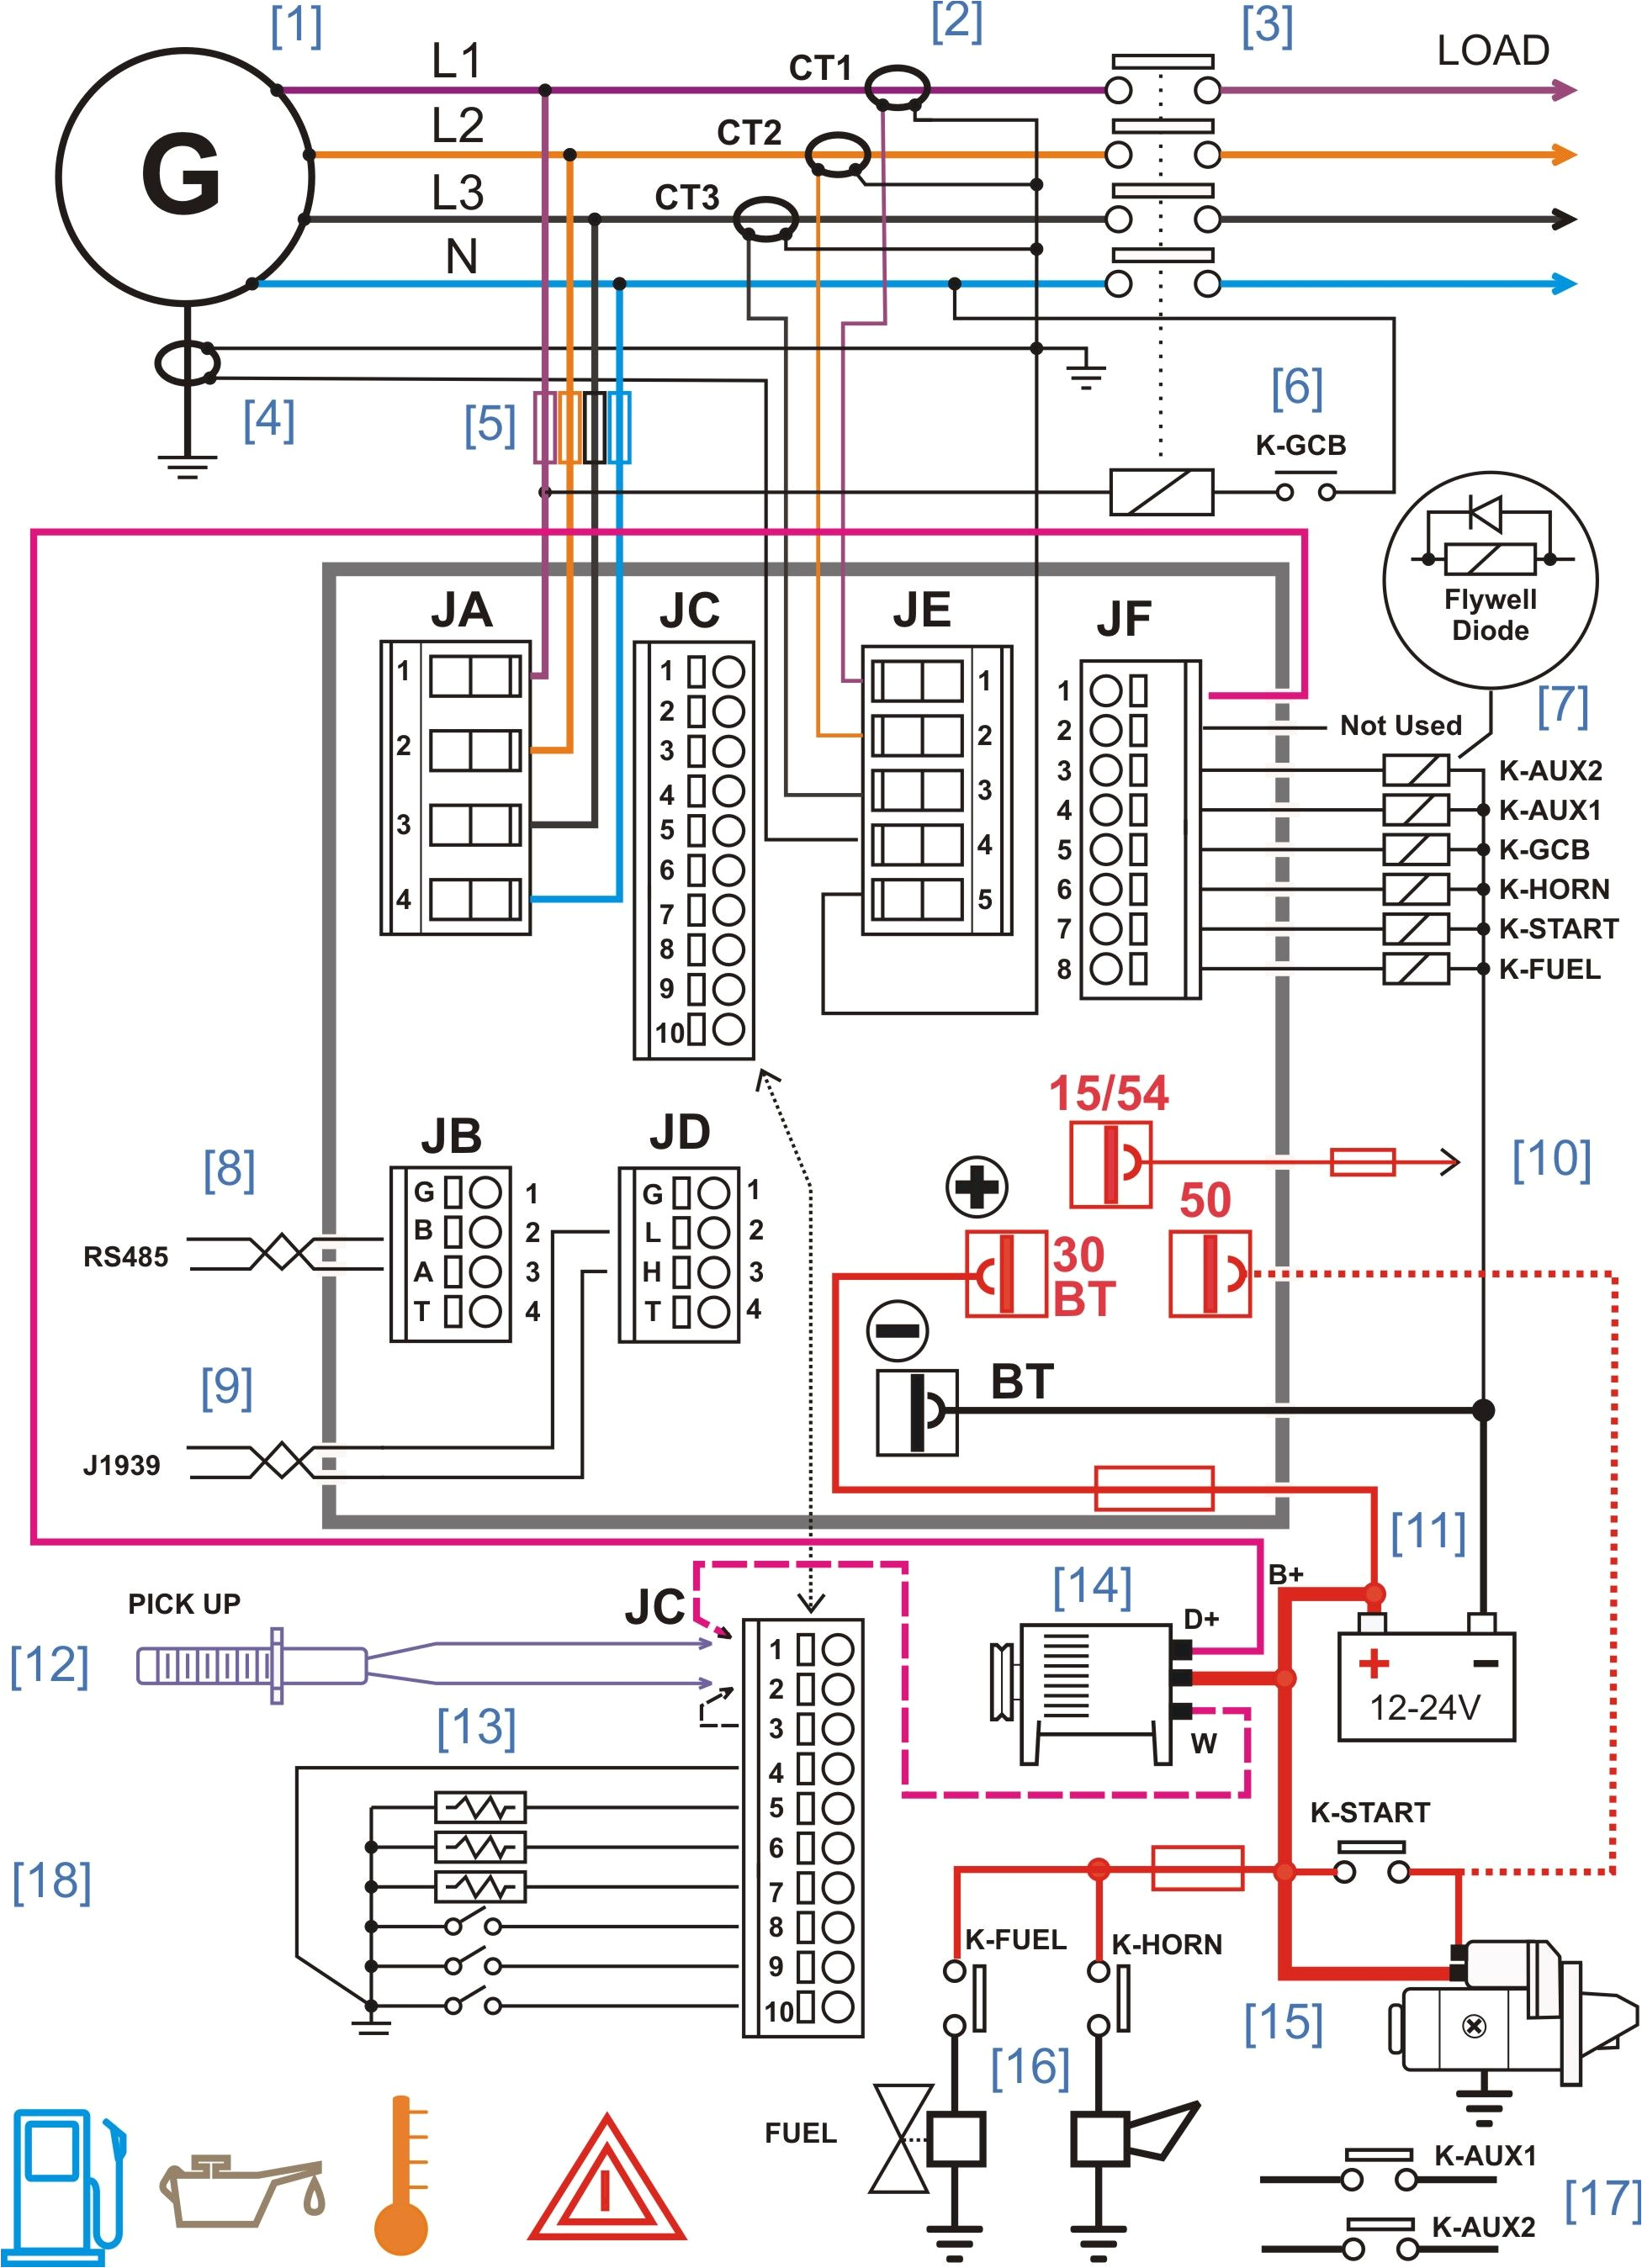 generator wiring diagrams wiring diagram mega kato wiring diagrams kato wiring diagrams